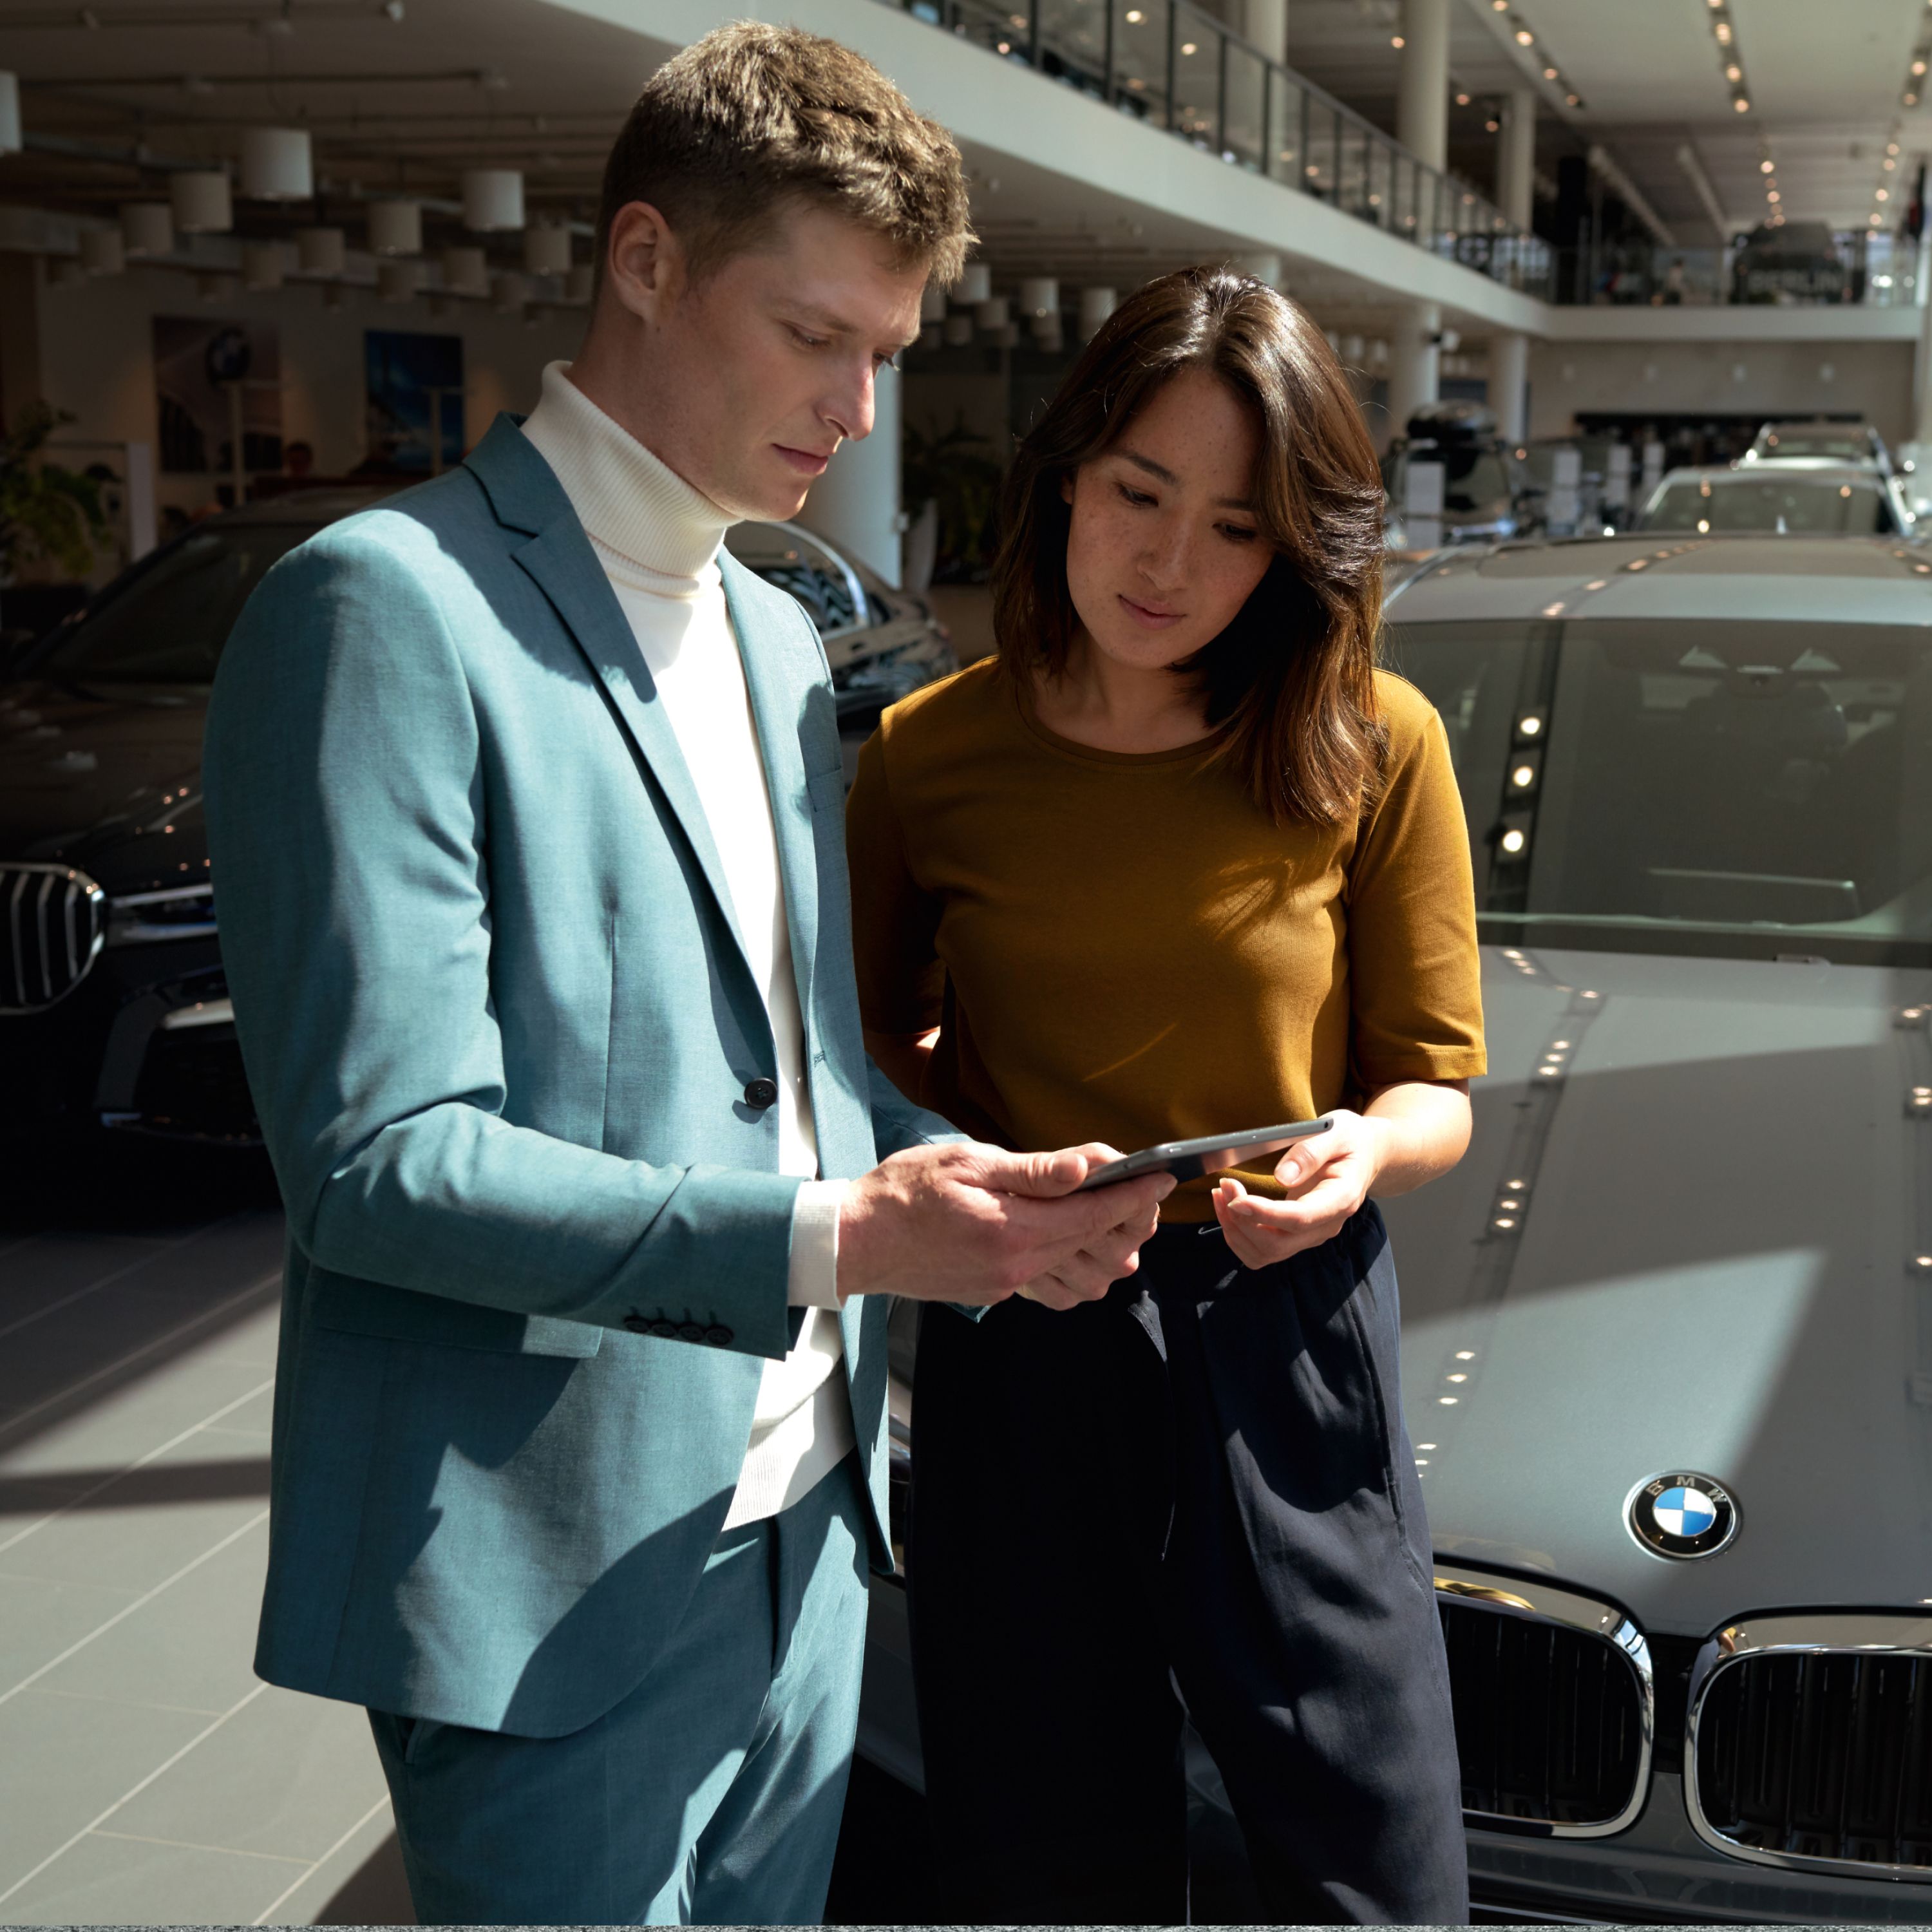 BMW electric cars Advice BMW Service Partner